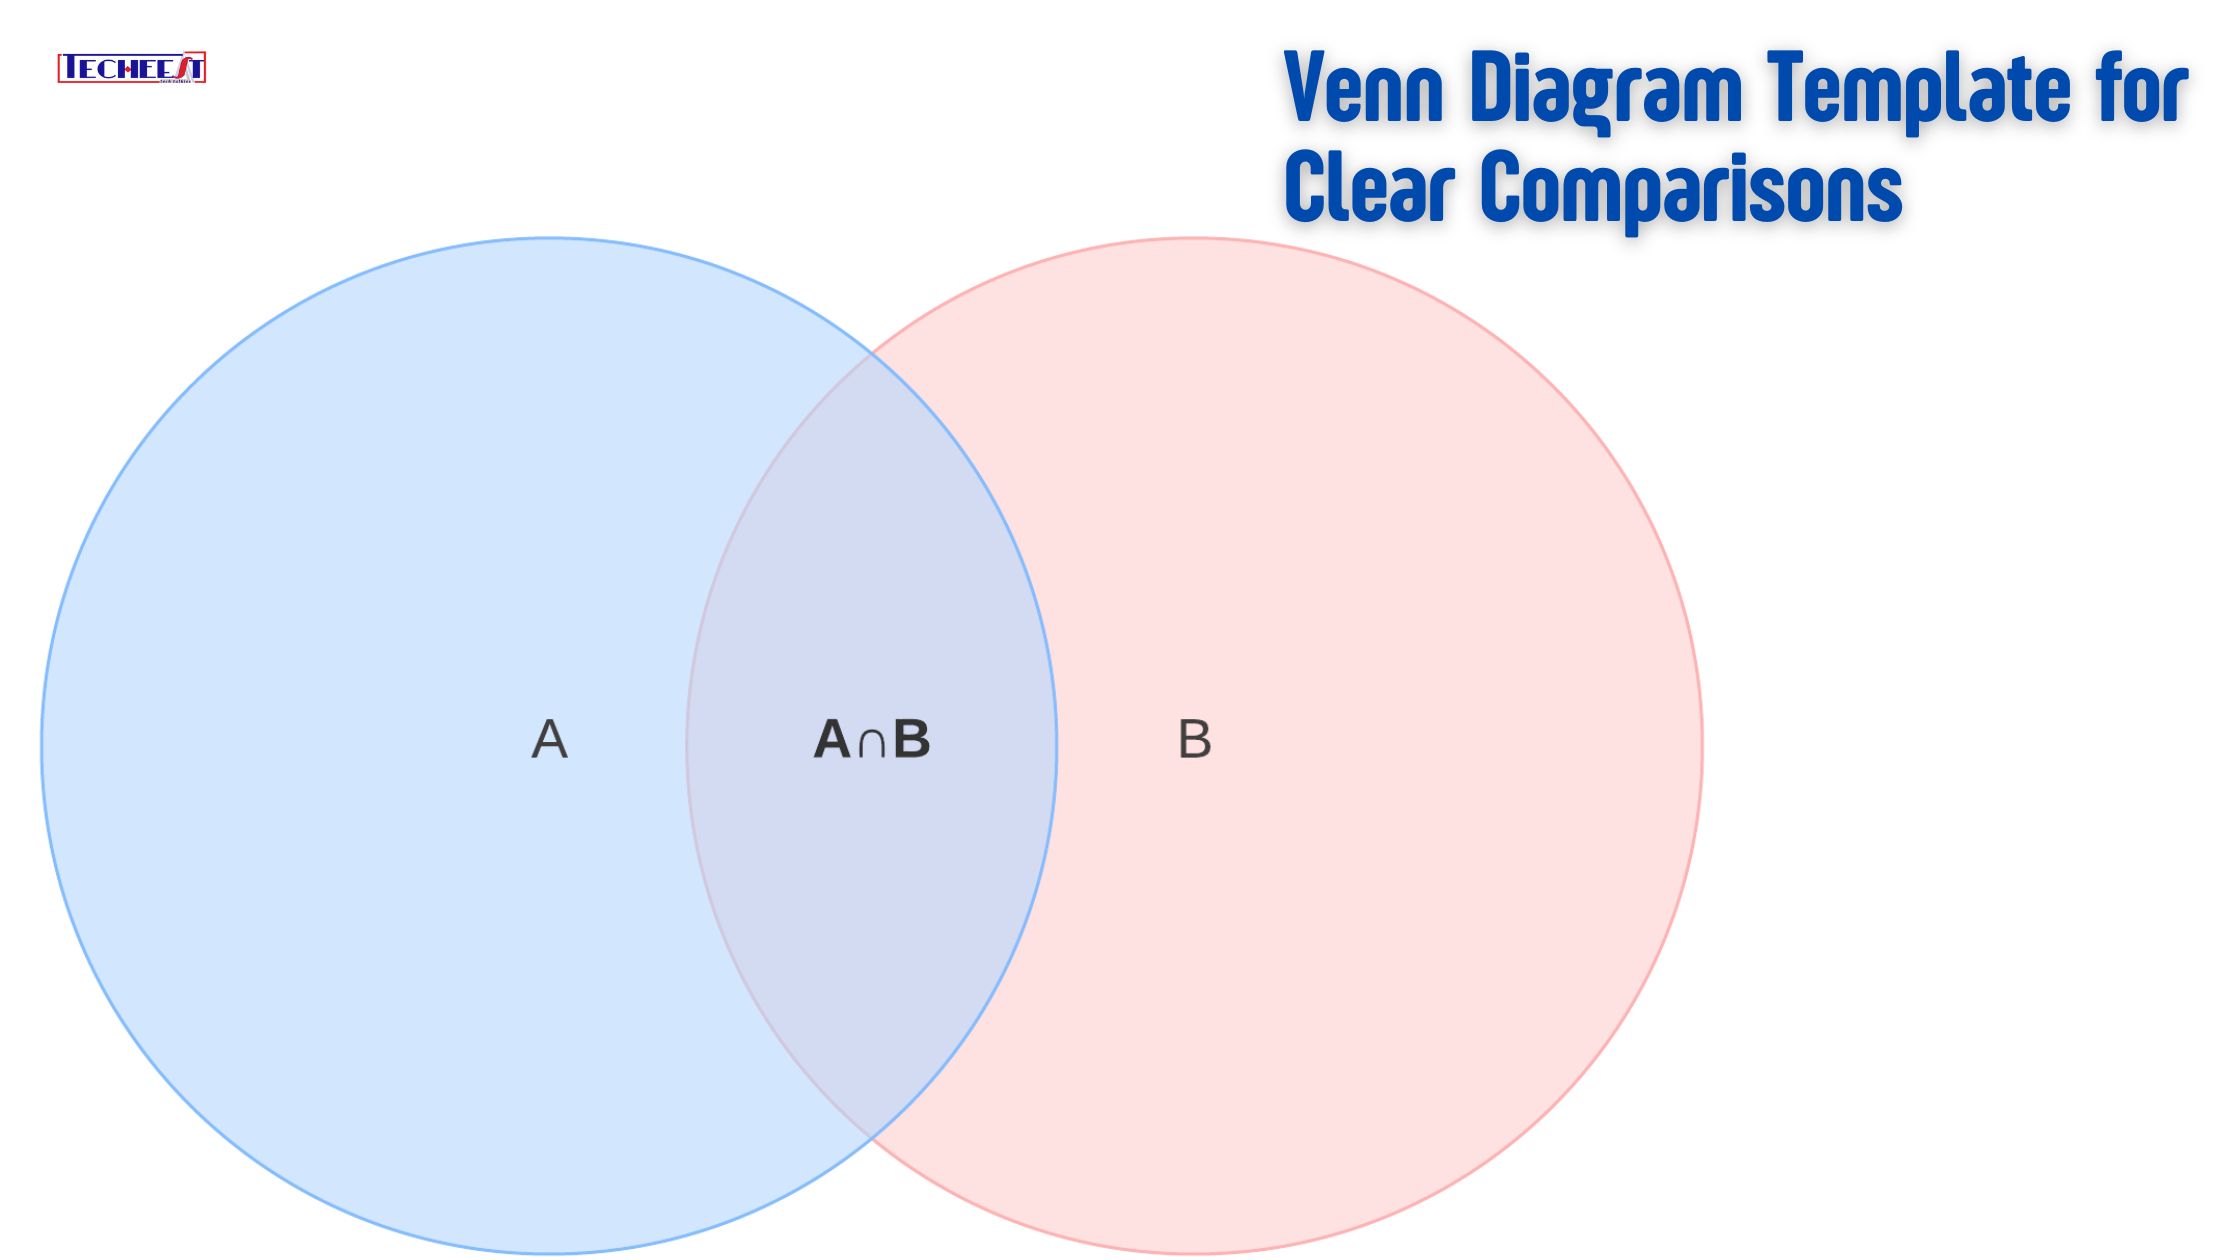 Venn Diagram Template for Clear Comparisons